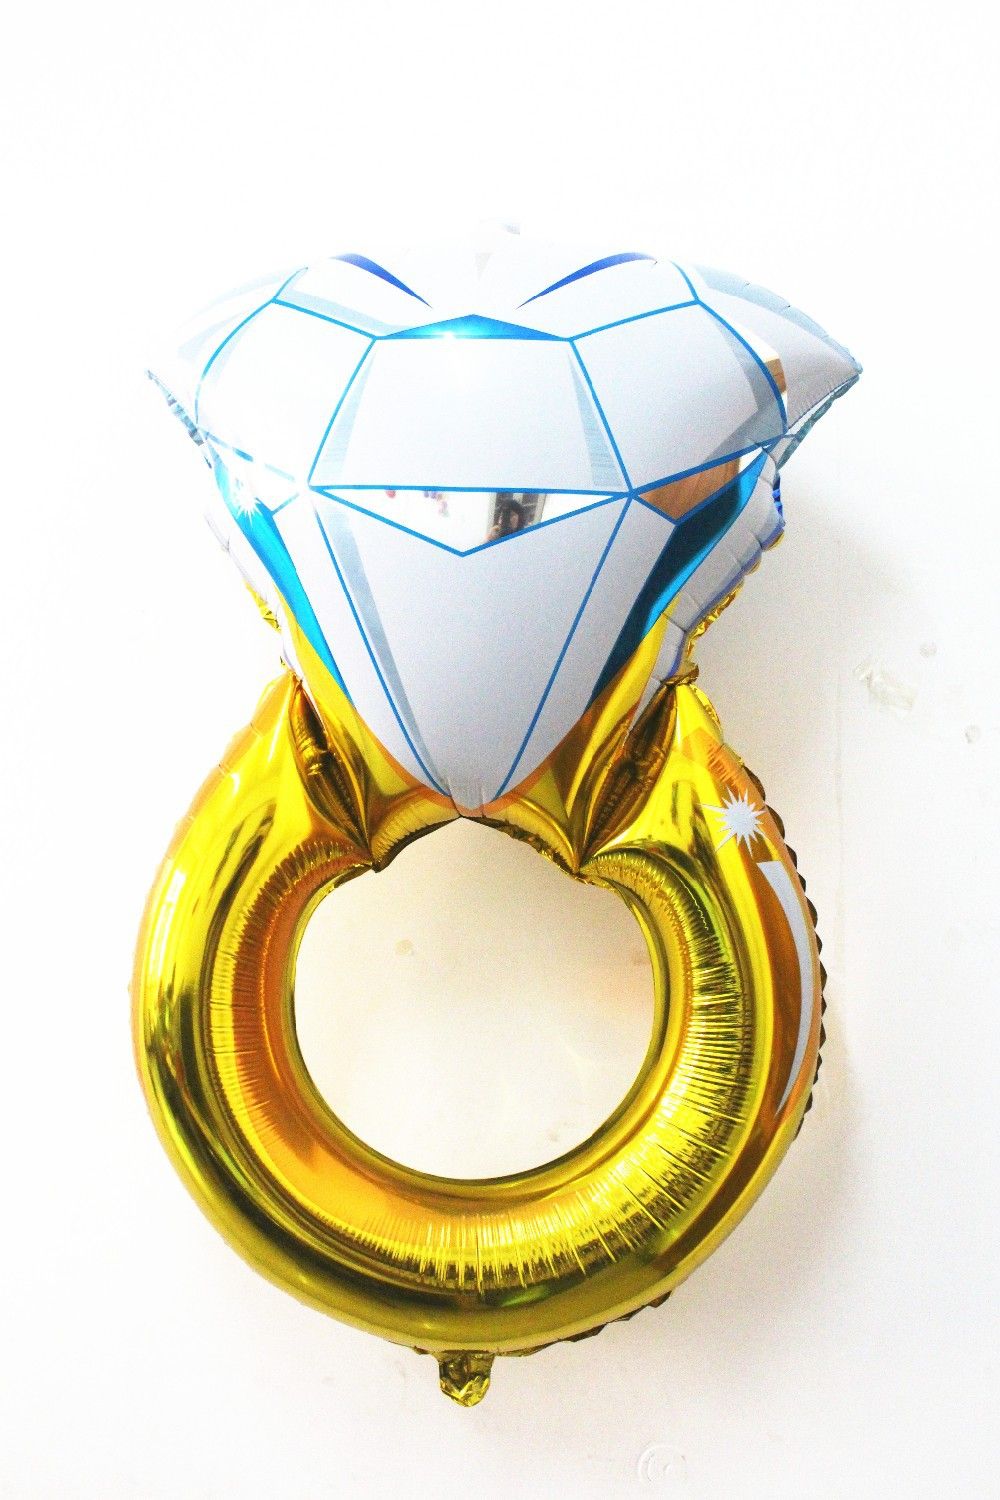 Wedding Balloons 5484cm Gold Diamond Ring Foil Balloons Wedding